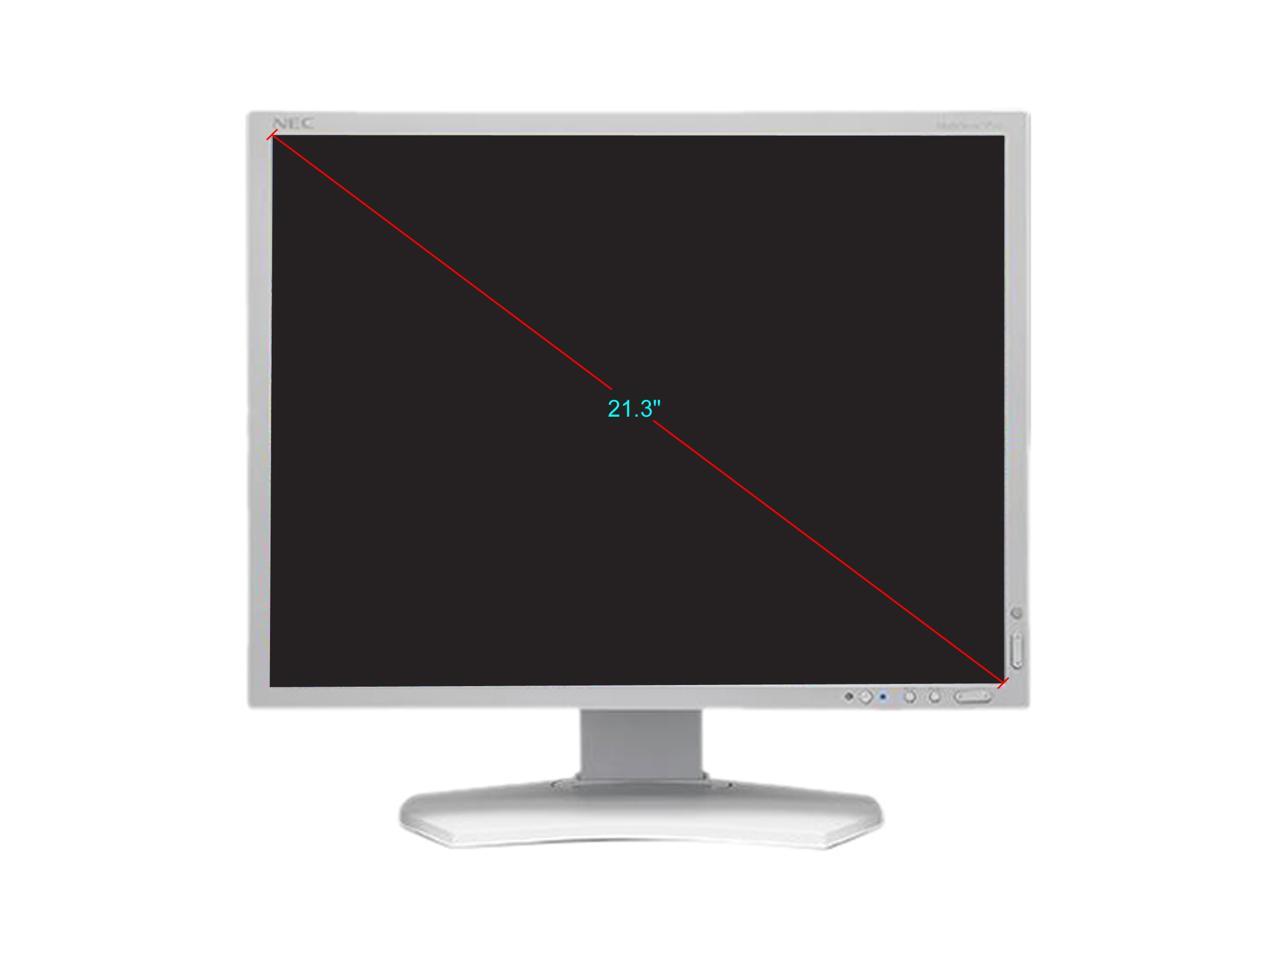 EIZO NEC MULTISYNC P212 21.3” COLOR LCD MONITOR IPS PANEL 4:3 